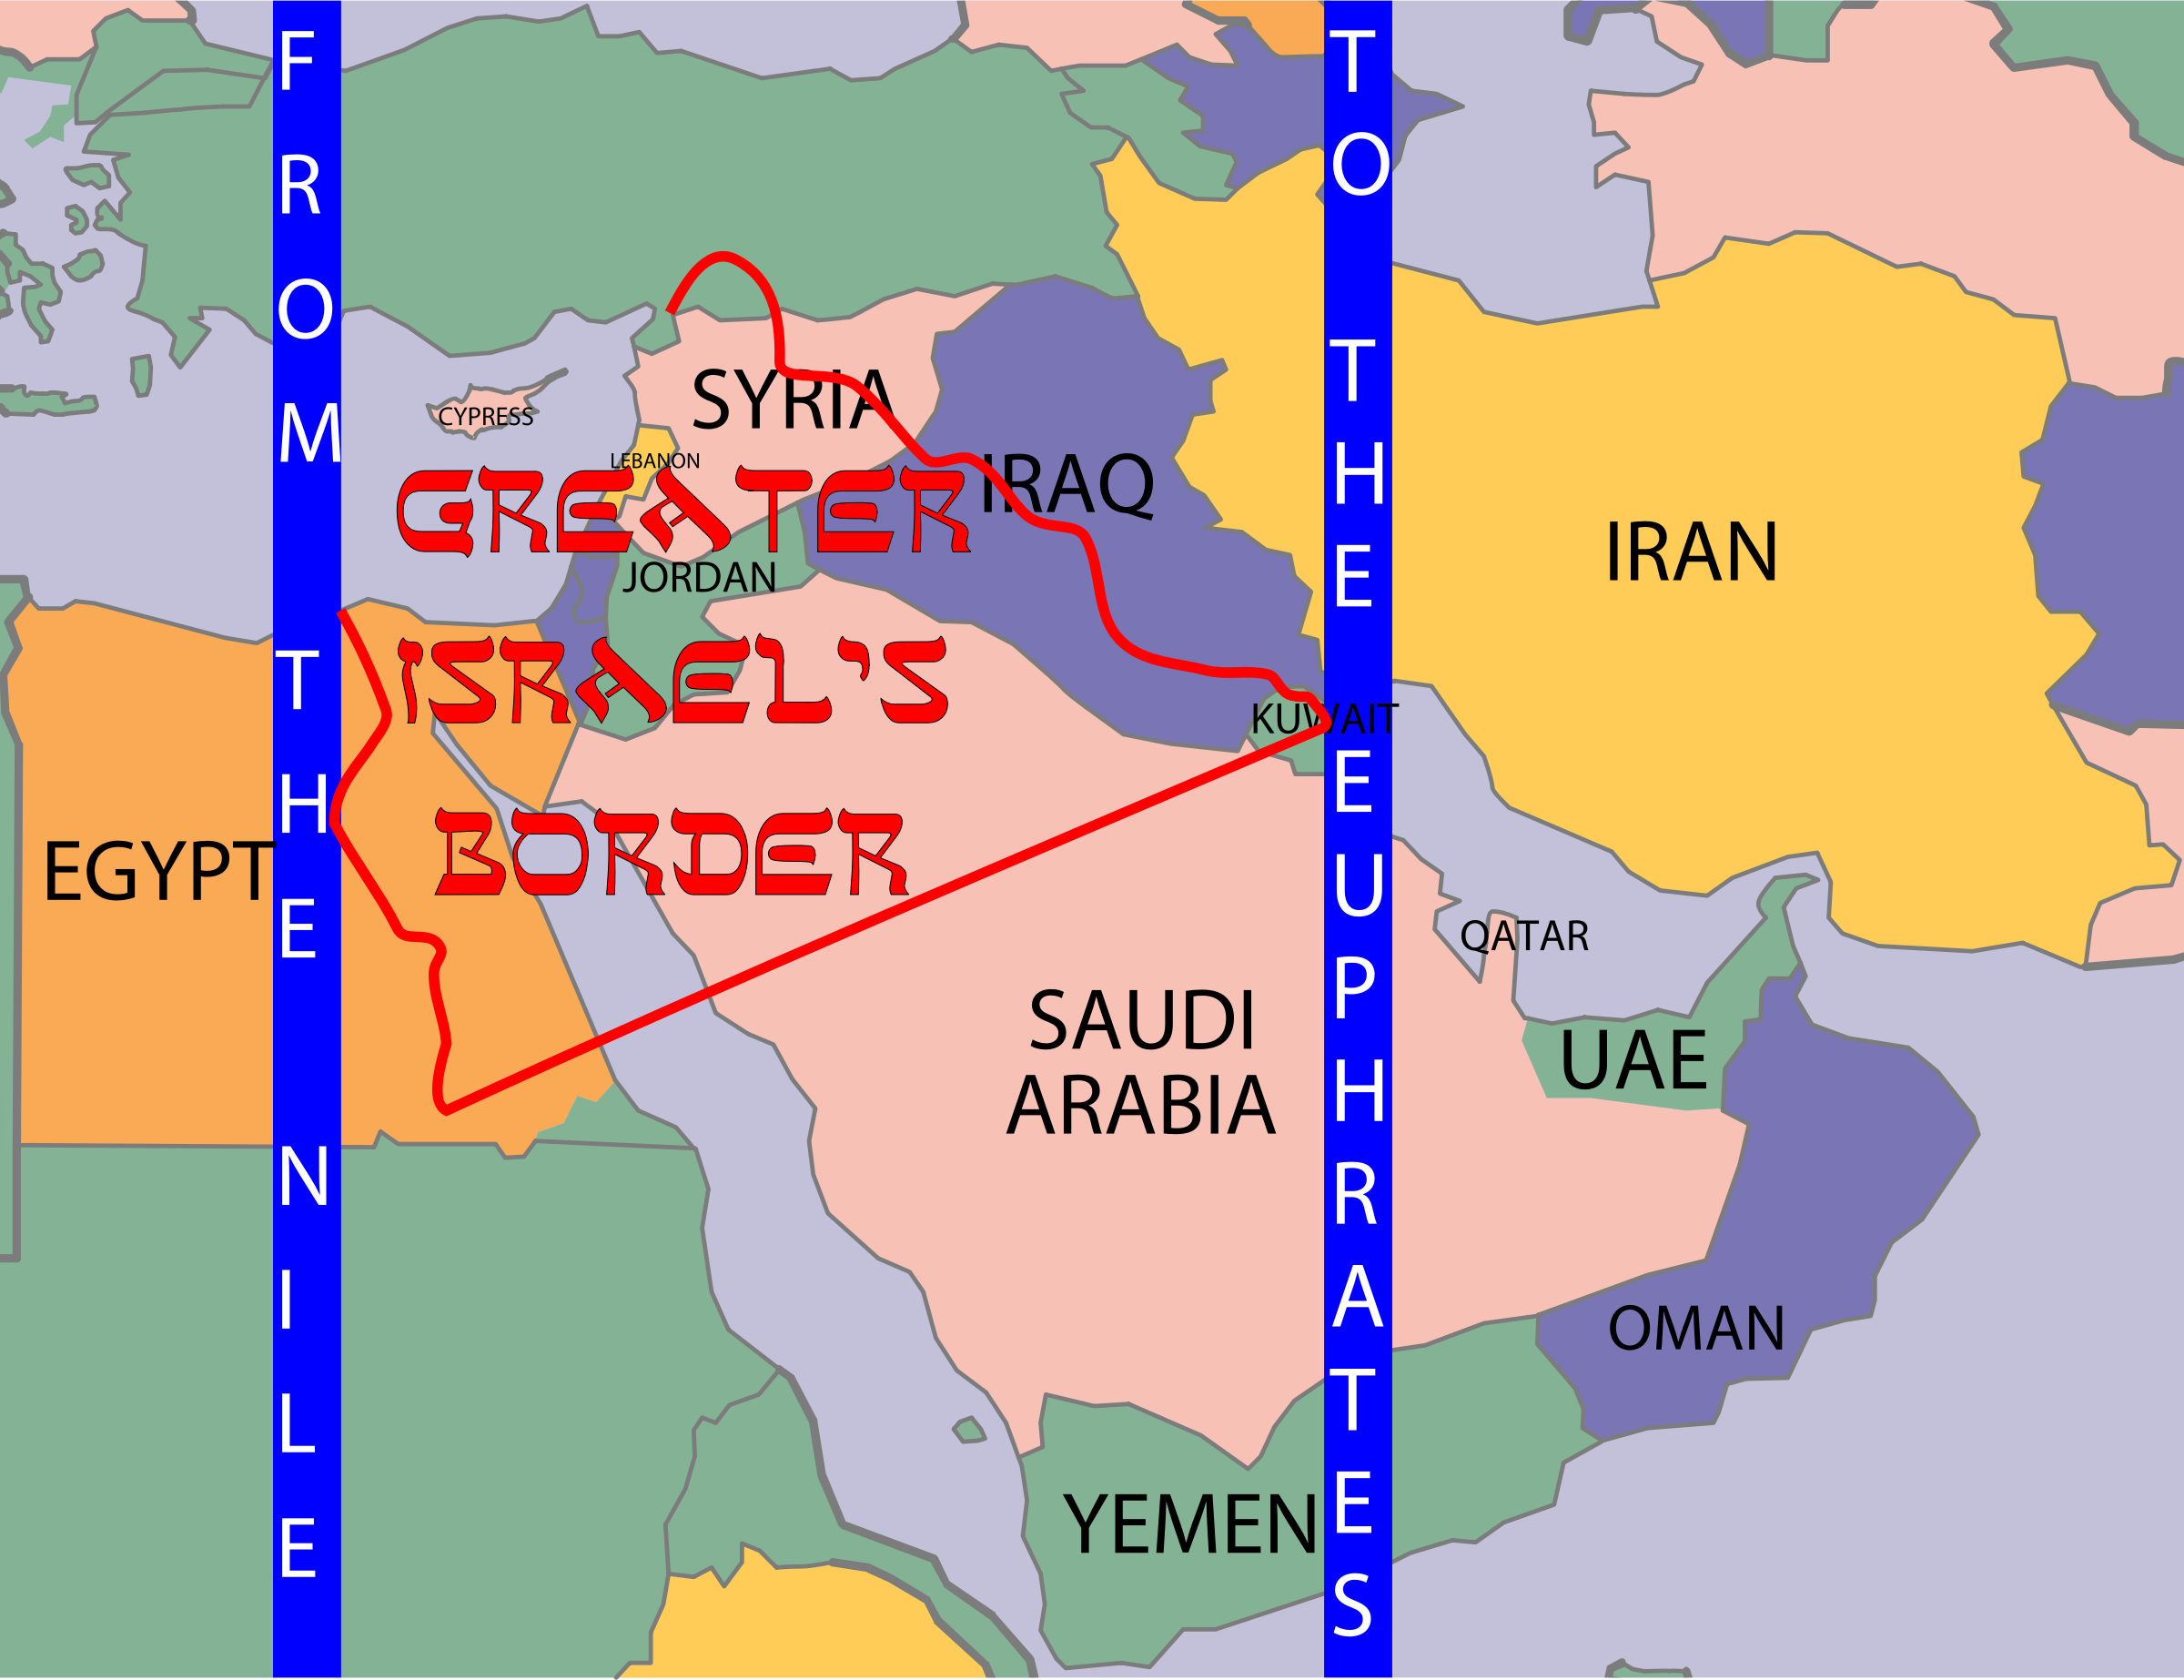 Eretz Israel Greater Israel Borders Map 